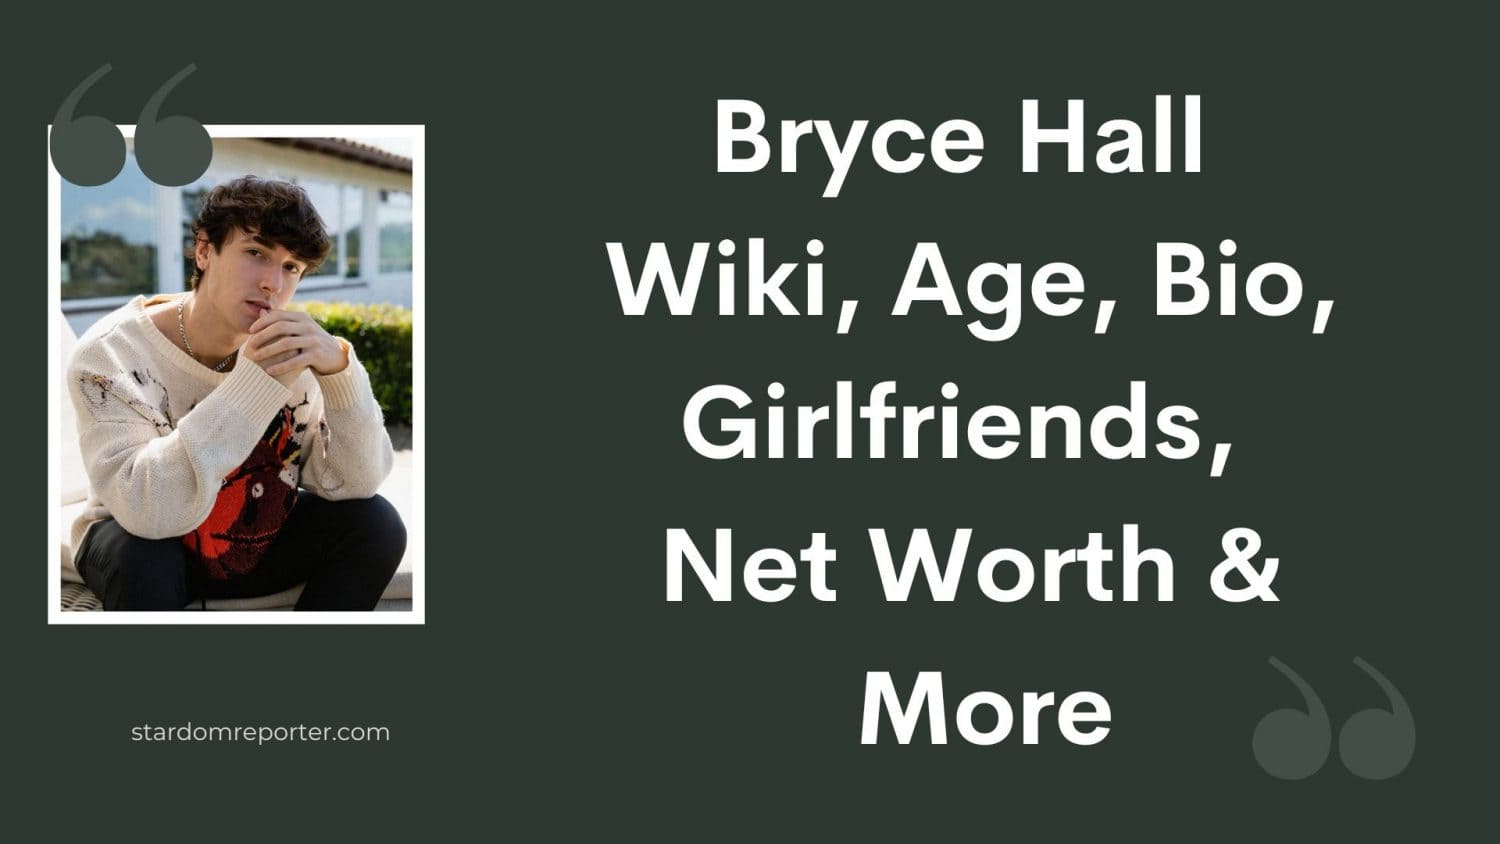 Bryce Hall Wiki, Age, Bio, Girlfriends, Net Worth & More - 33